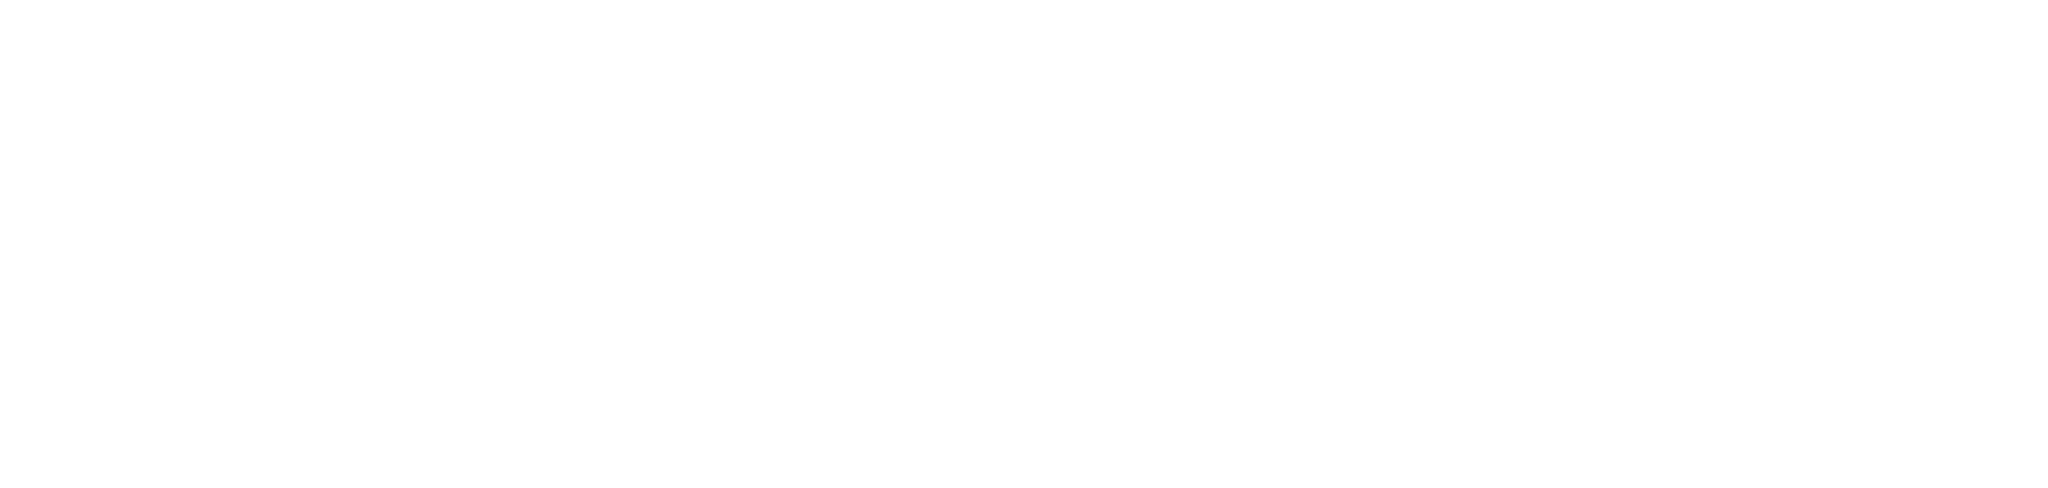 Coldwell Banker Logo white